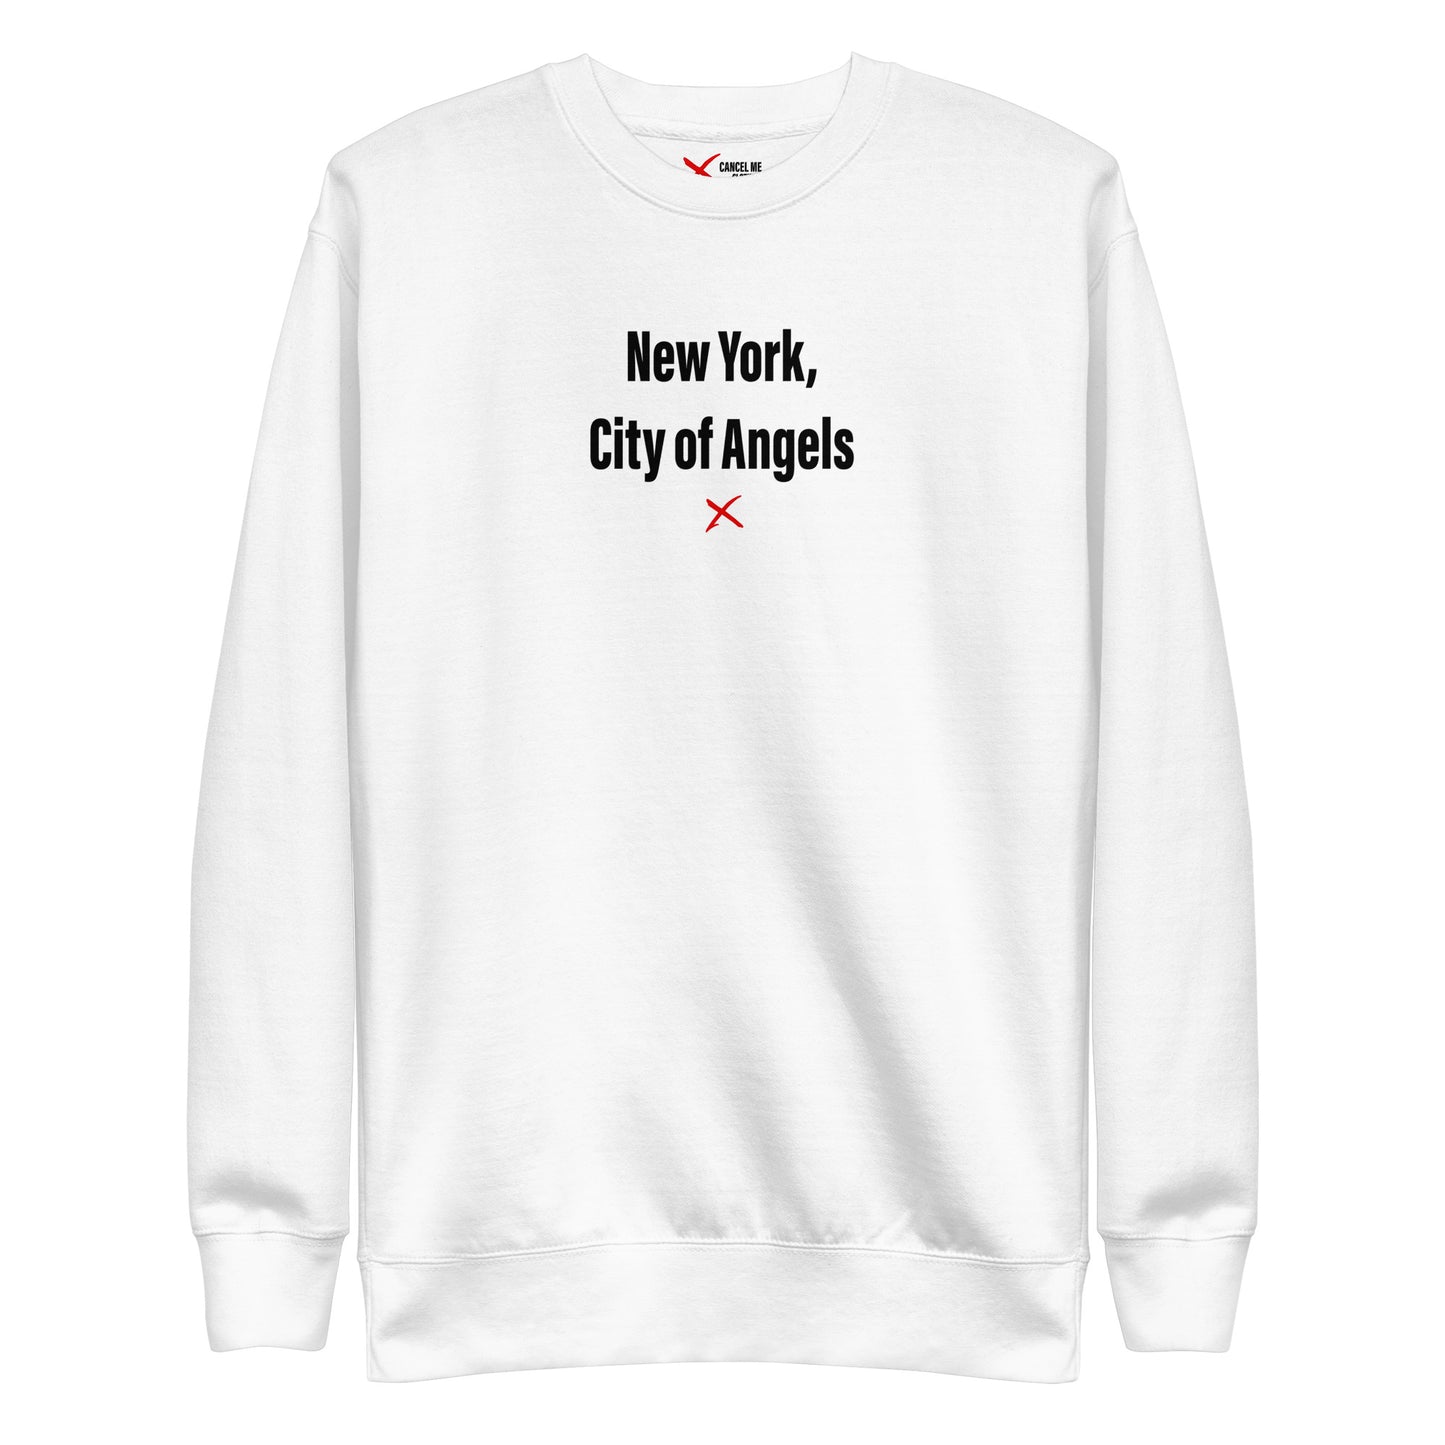 New York, City of Angels - Sweatshirt